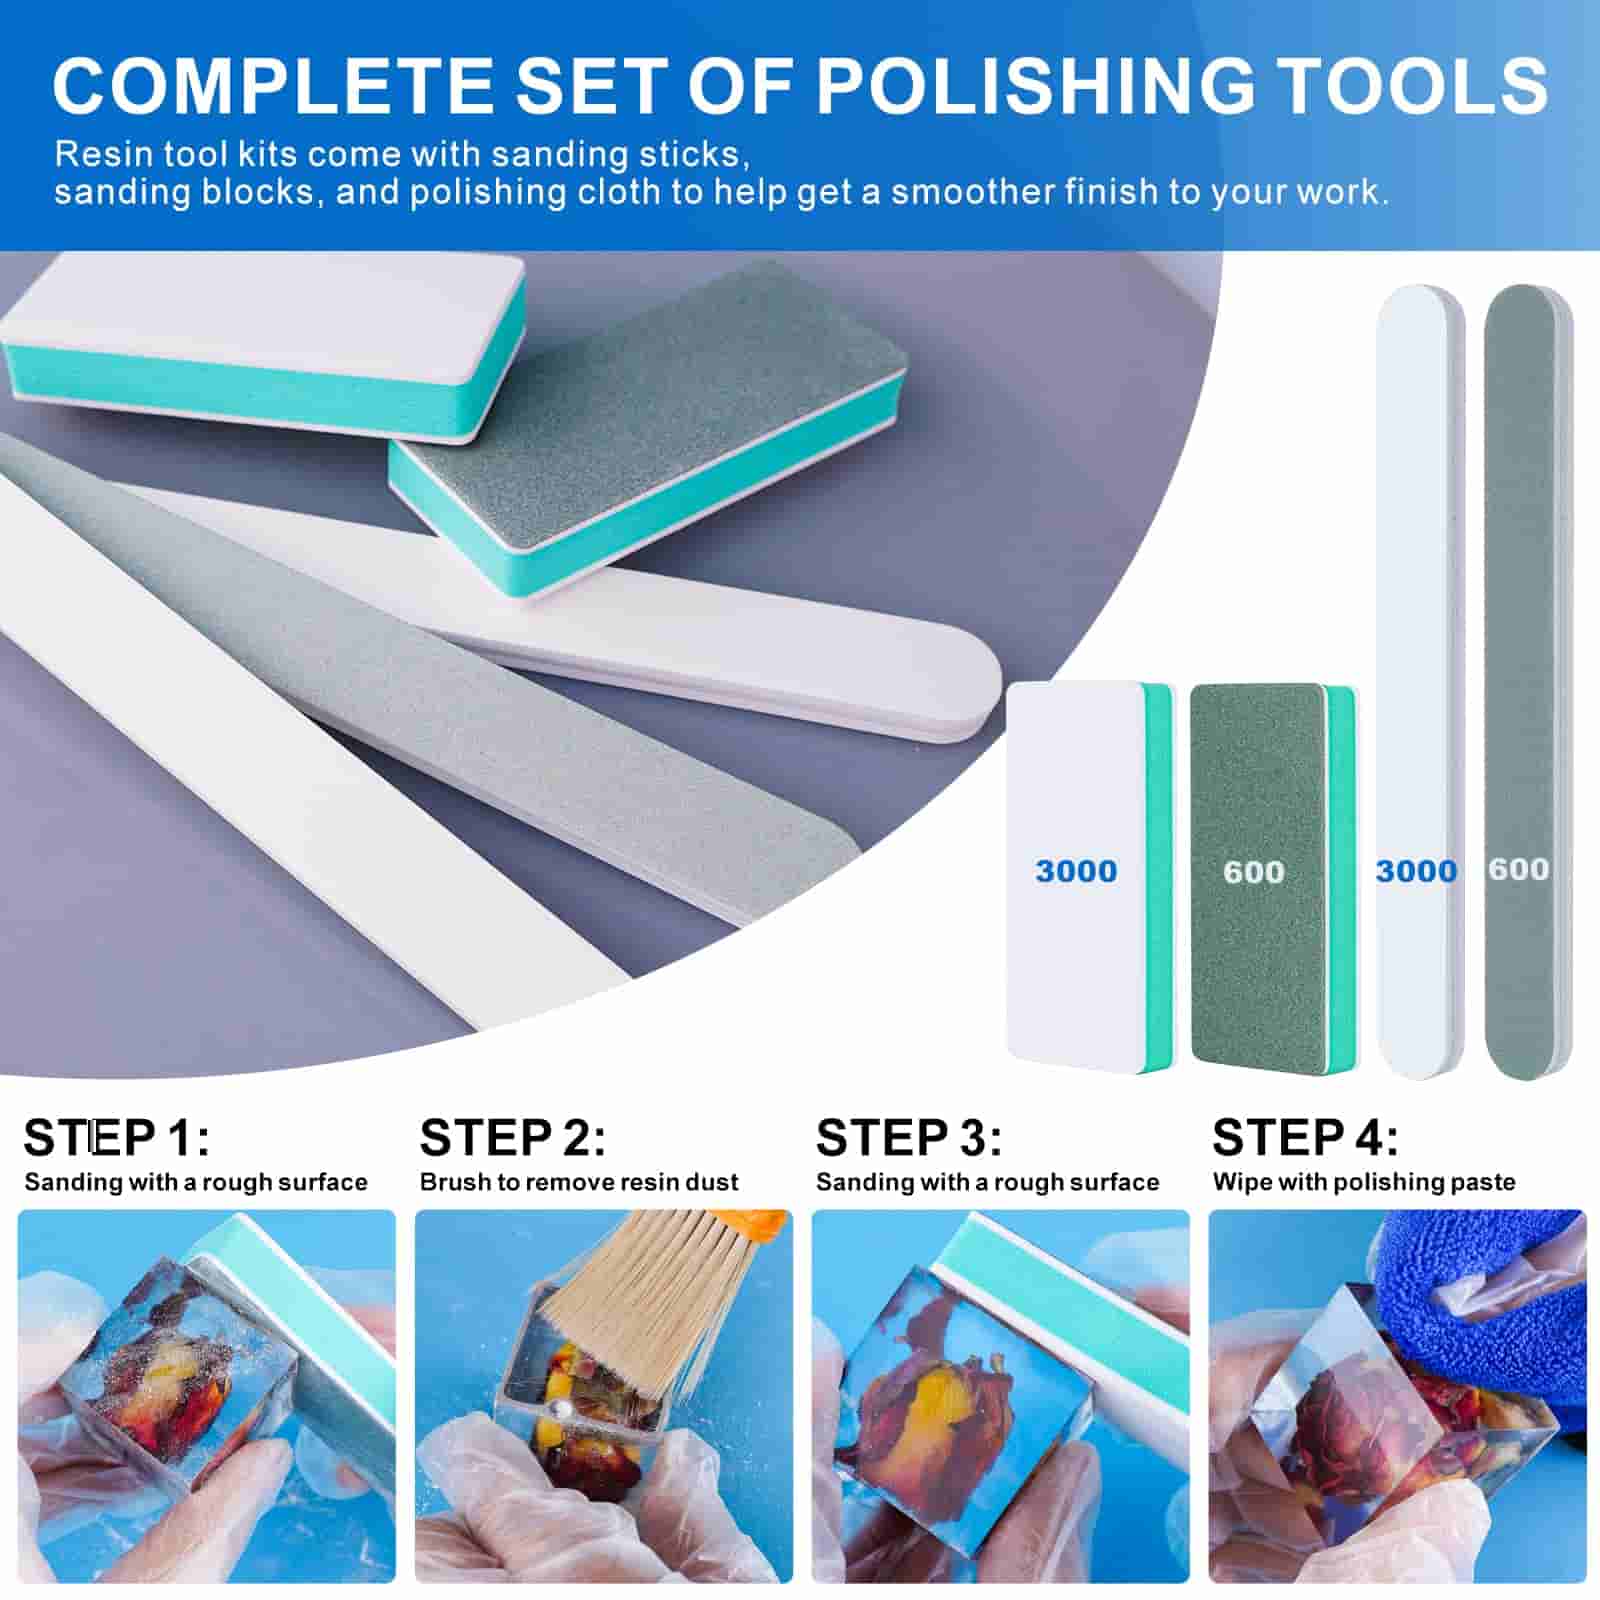 Let's Resin Resin Polishing Kit,33Pcs Resin Supplies with Sandpaper,Resin File Kit,Polishing Strips